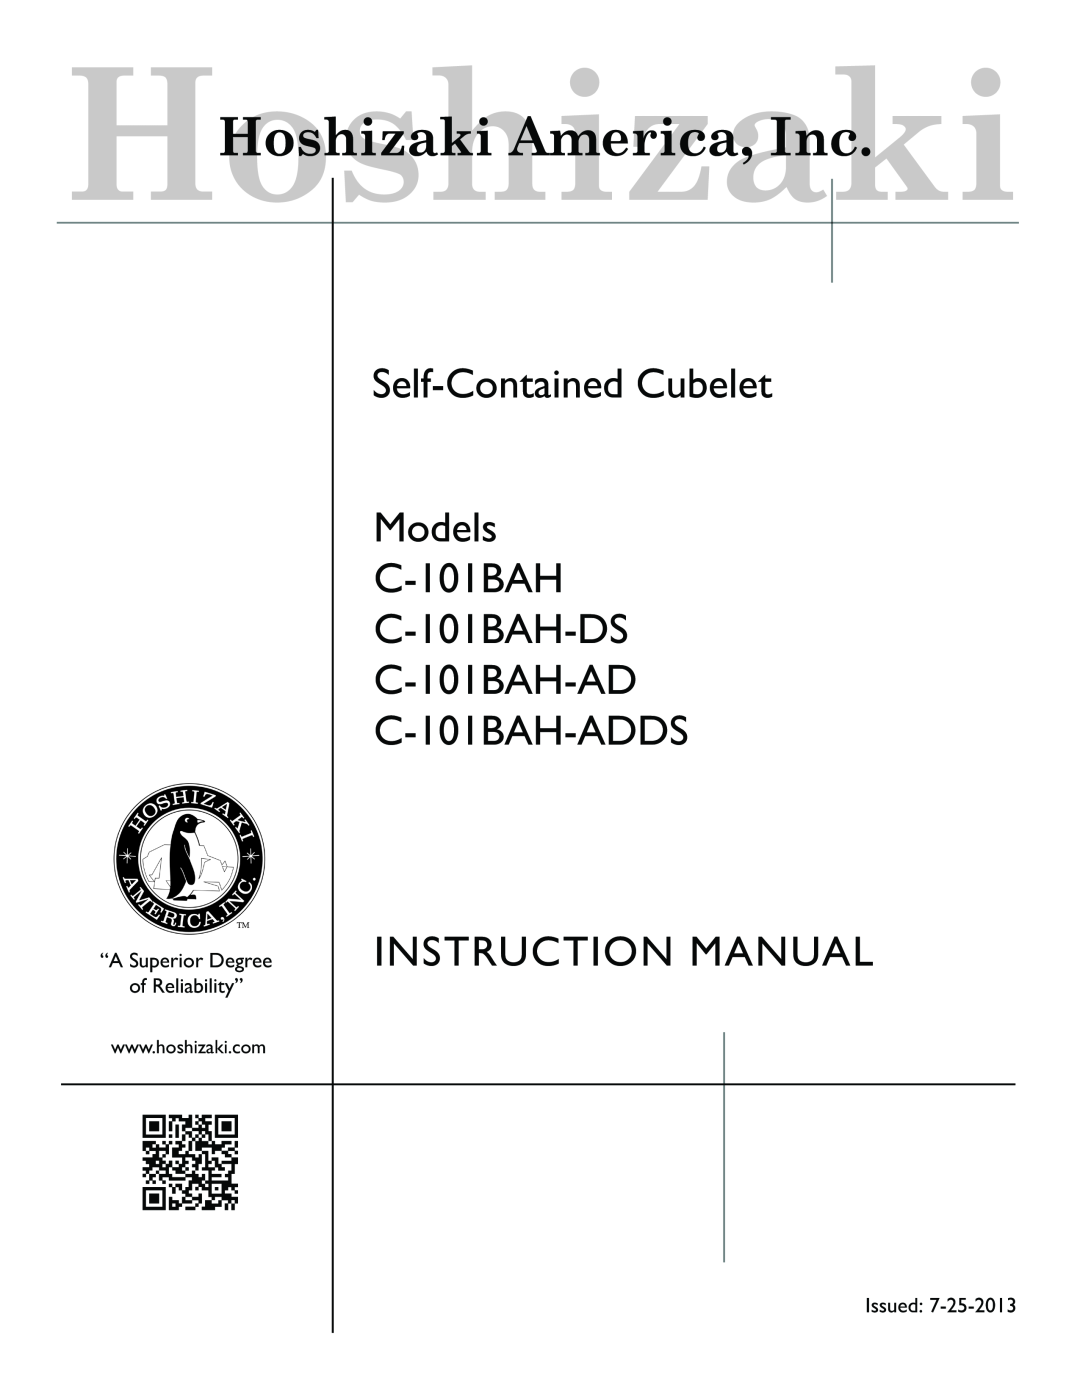 Hoshizaki C-101BAH-ADDS instruction manual Self-Contained Cubelet Models C-101BAH C-101BAH-DS C-101BAH-AD 